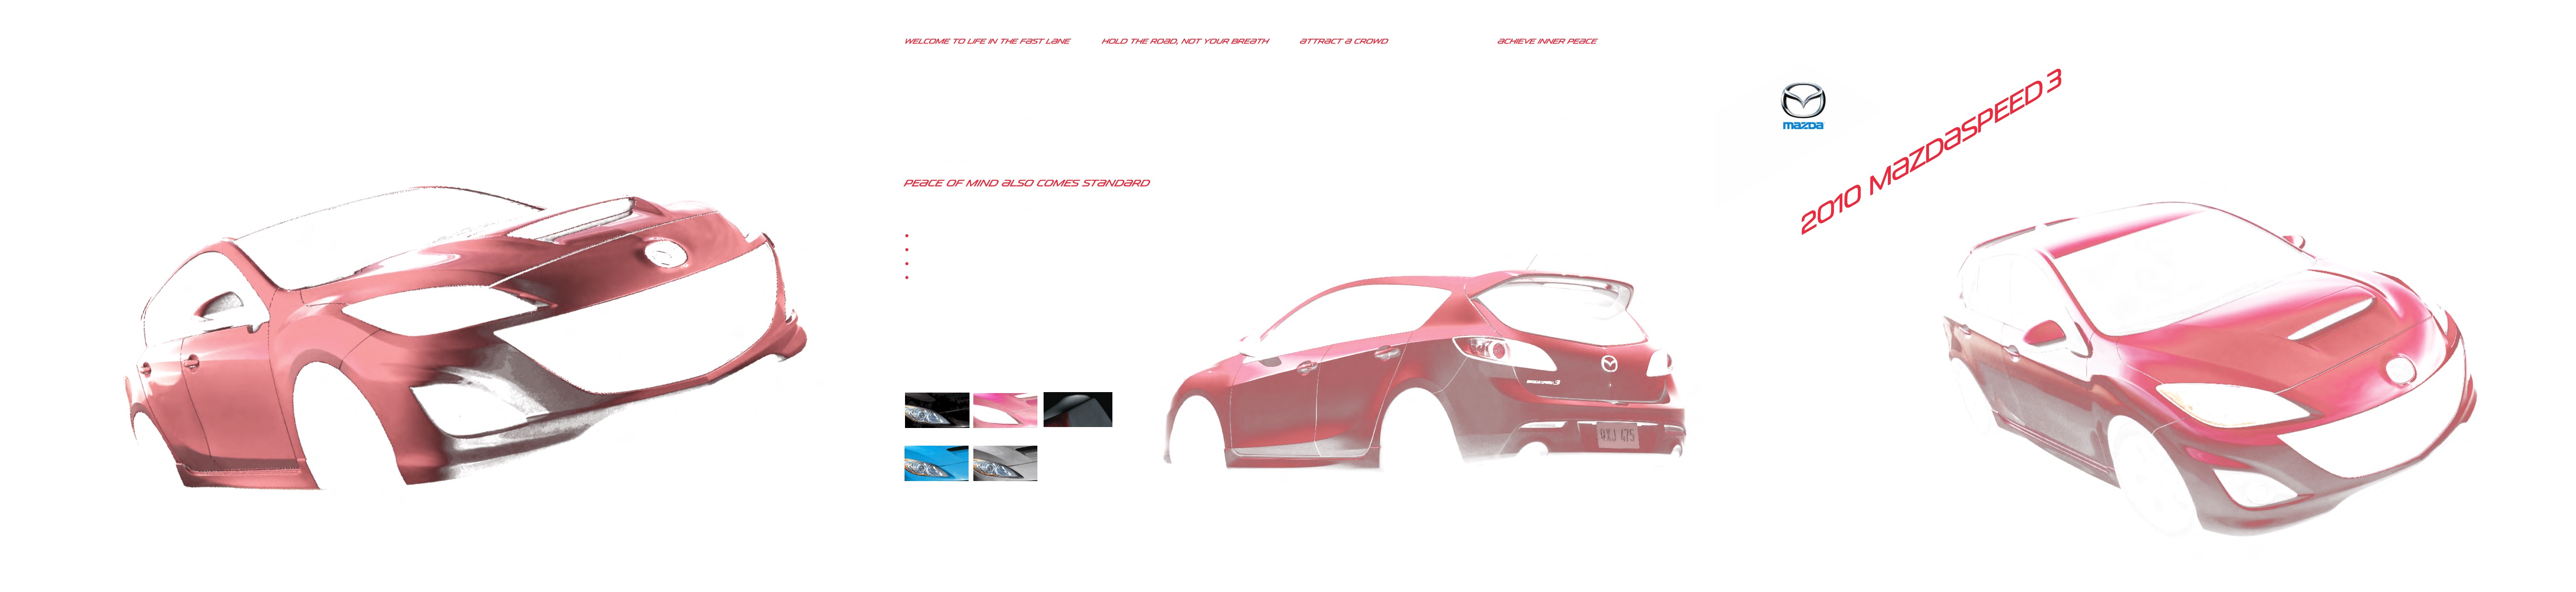 2010 Mazda 3 Speed Brochure